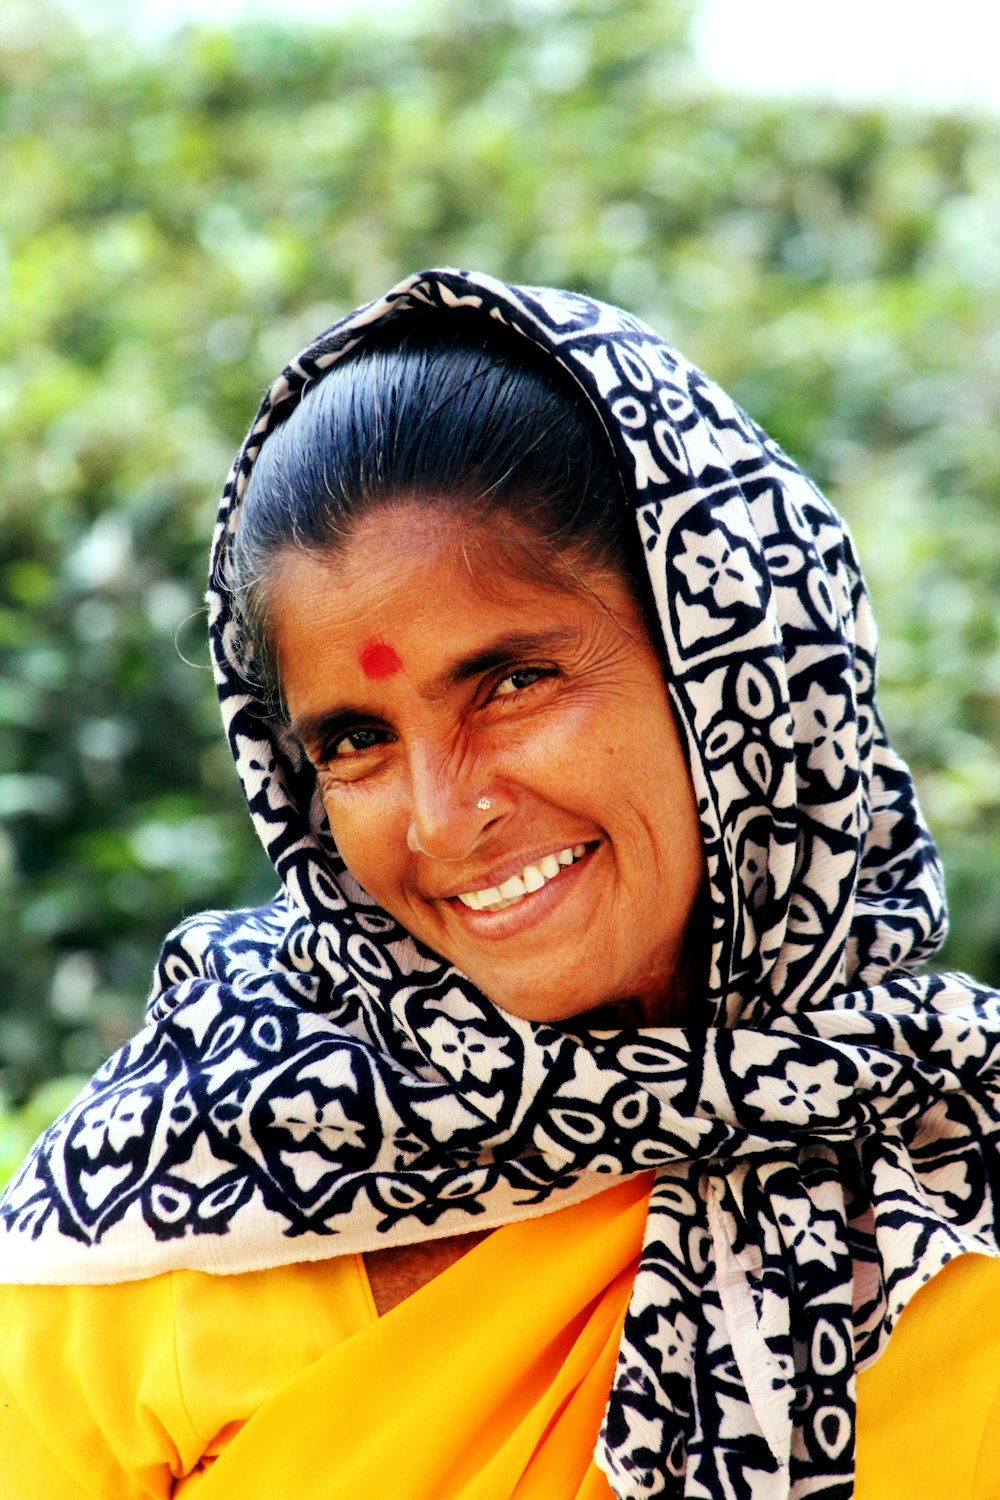 mulher vestindo lenço floral branco e preto enquanto sorri